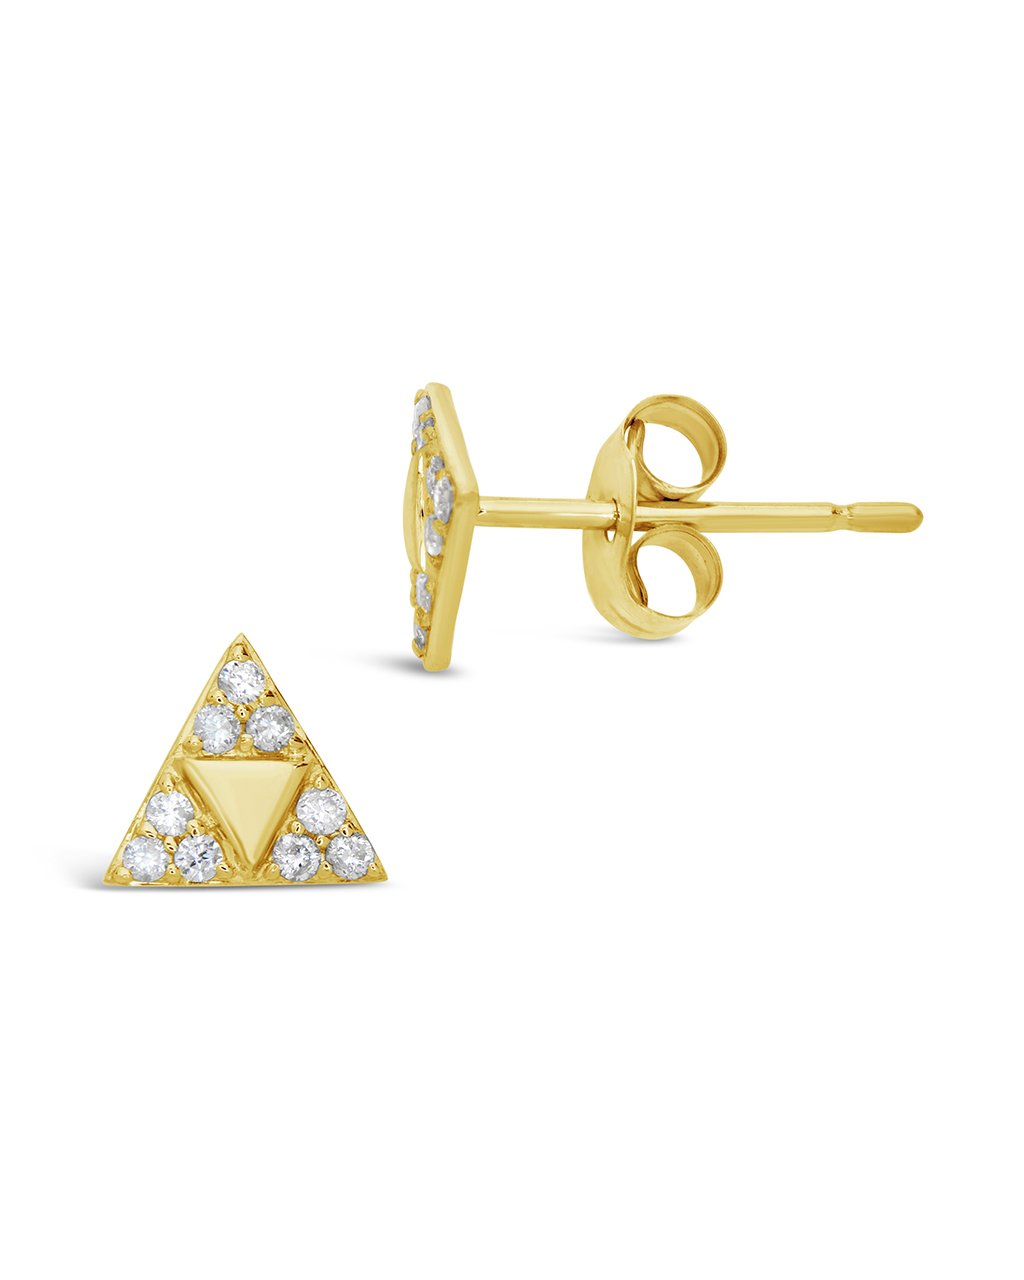 SF Fine 14K Diamond Pyramid Earrings in Gold | Lord & Taylor